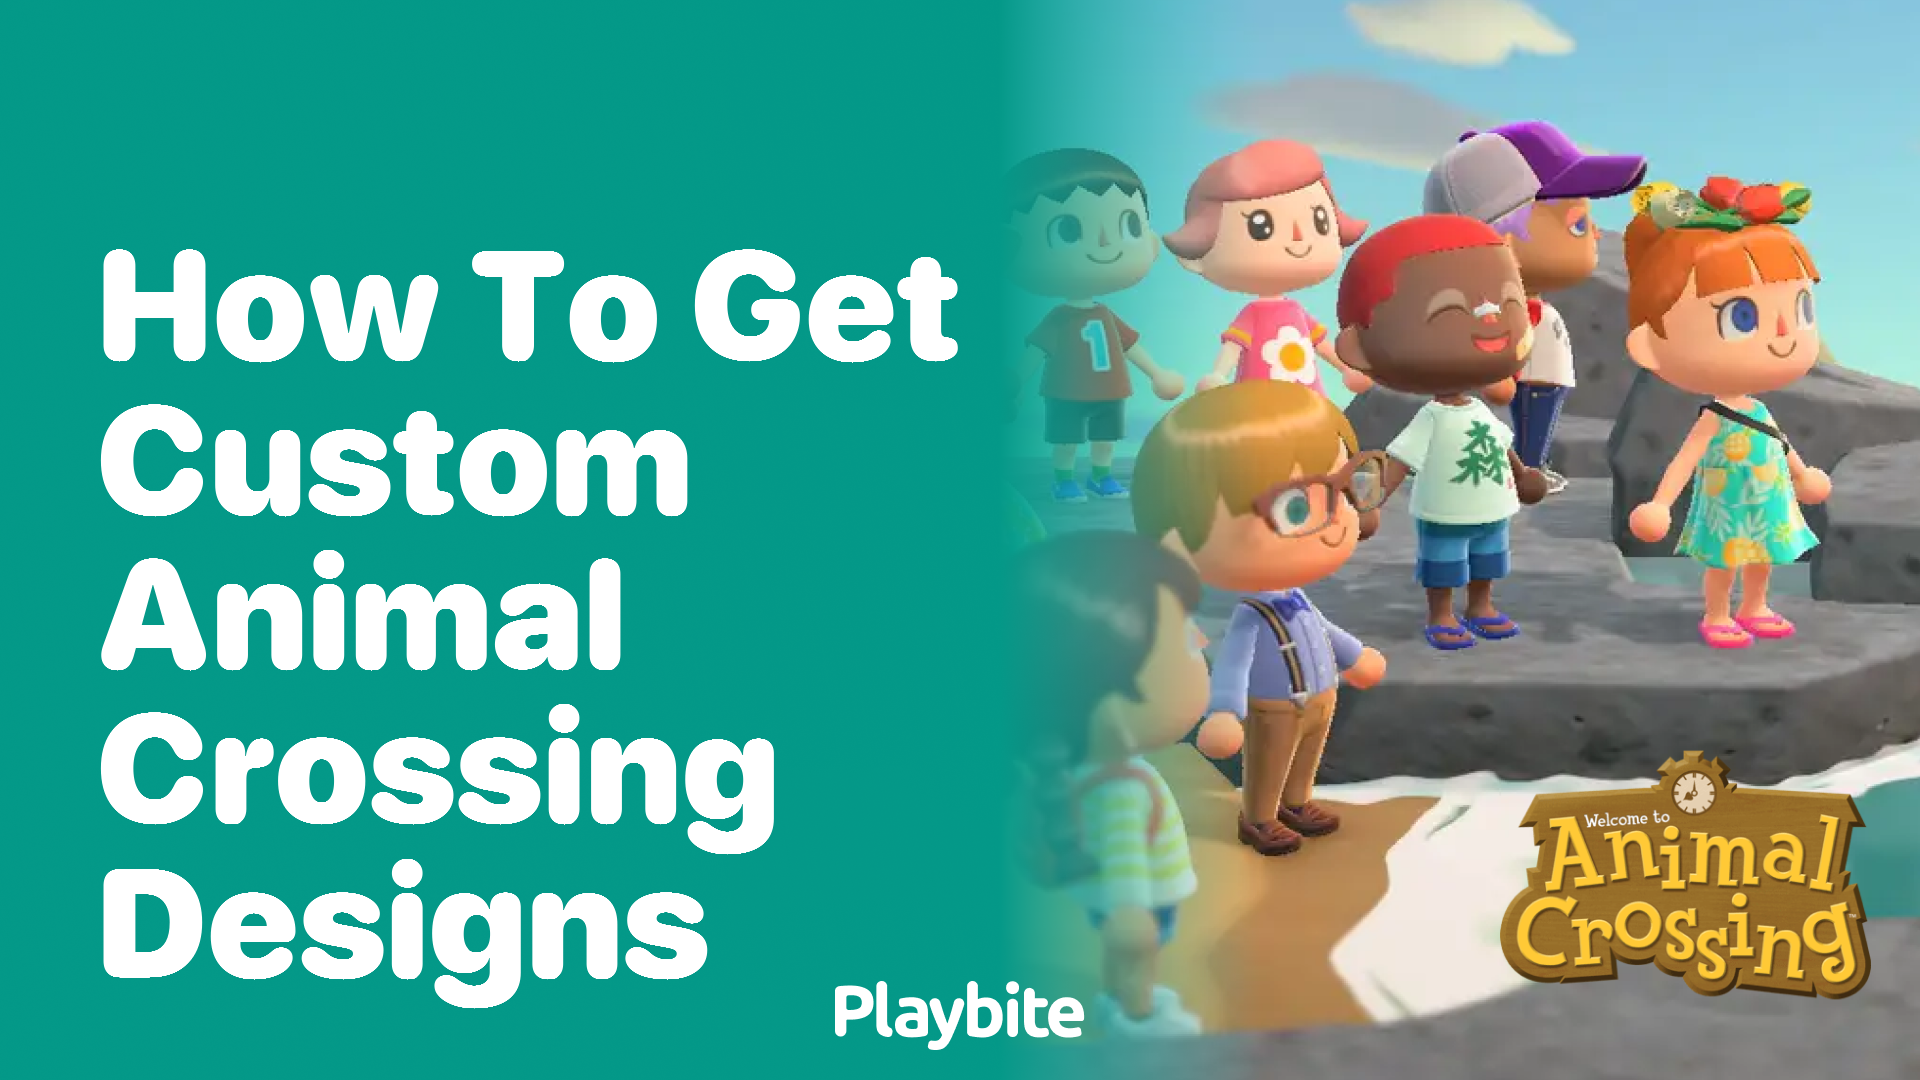 How to Get Custom Animal Crossing Designs